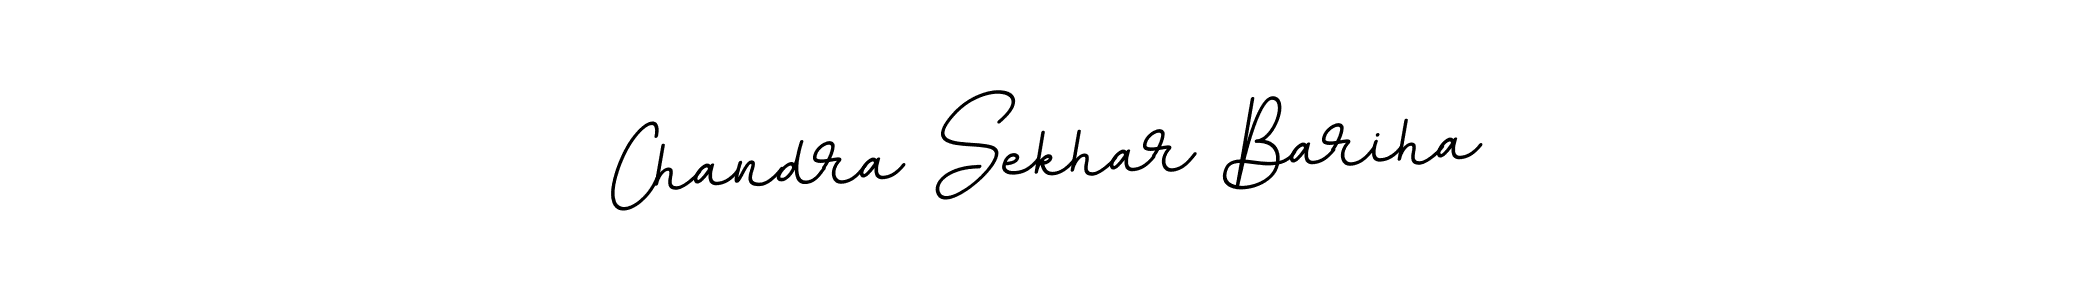 How to Draw Chandra Sekhar Bariha signature style? BallpointsItalic-DORy9 is a latest design signature styles for name Chandra Sekhar Bariha. Chandra Sekhar Bariha signature style 11 images and pictures png